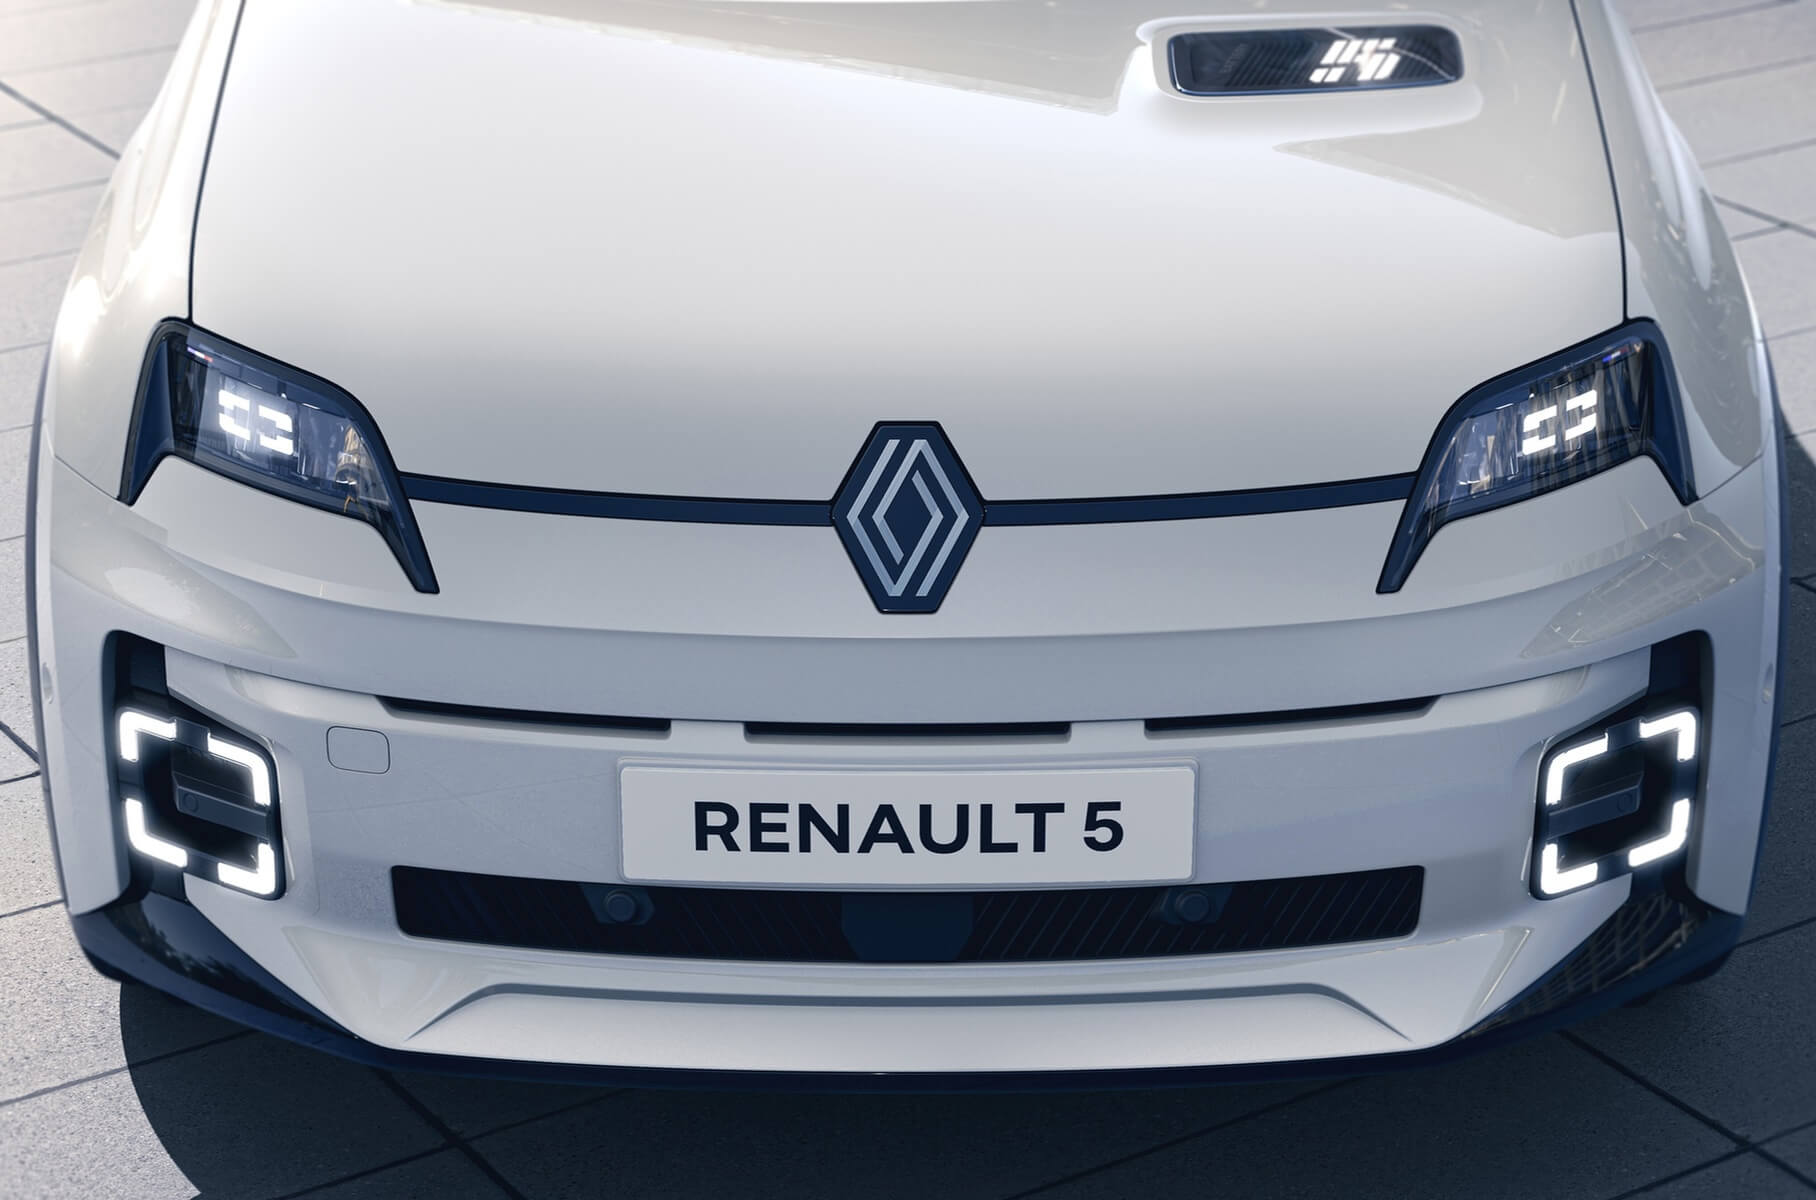 Renault 5 E-Tech electric car added a “tennis” version